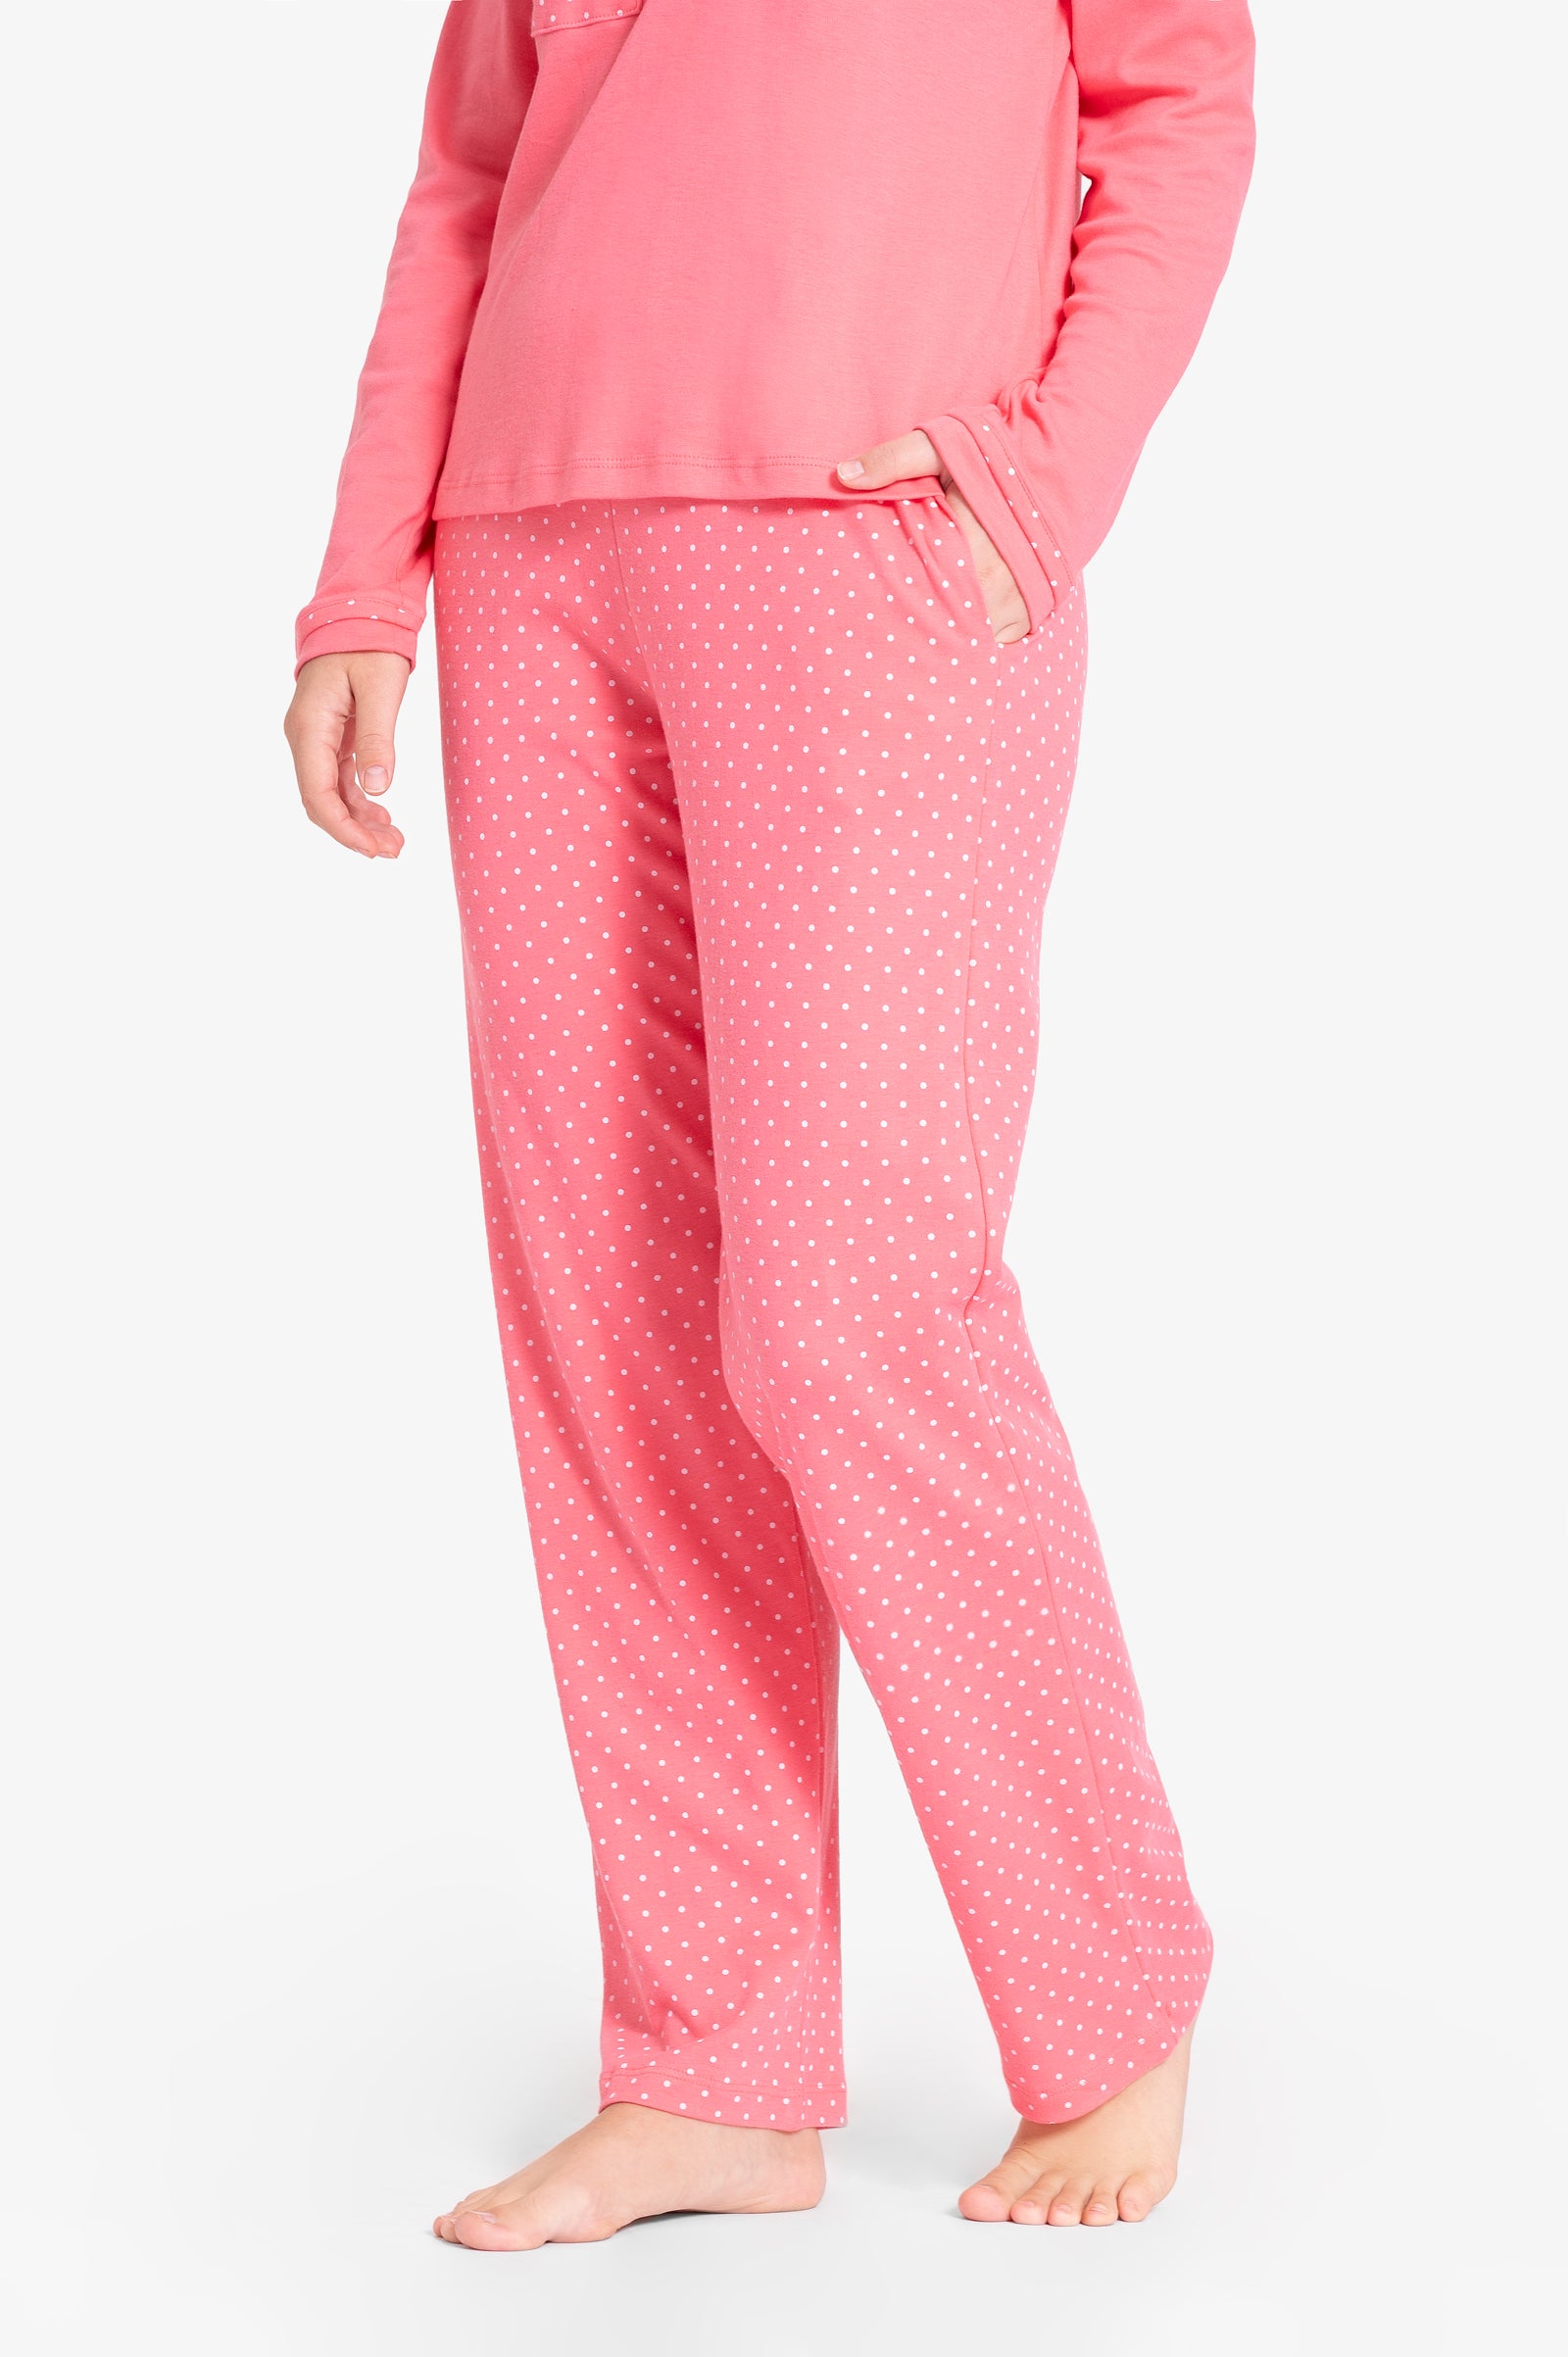 Pijama Set Pima Cotton - Abi - Coral